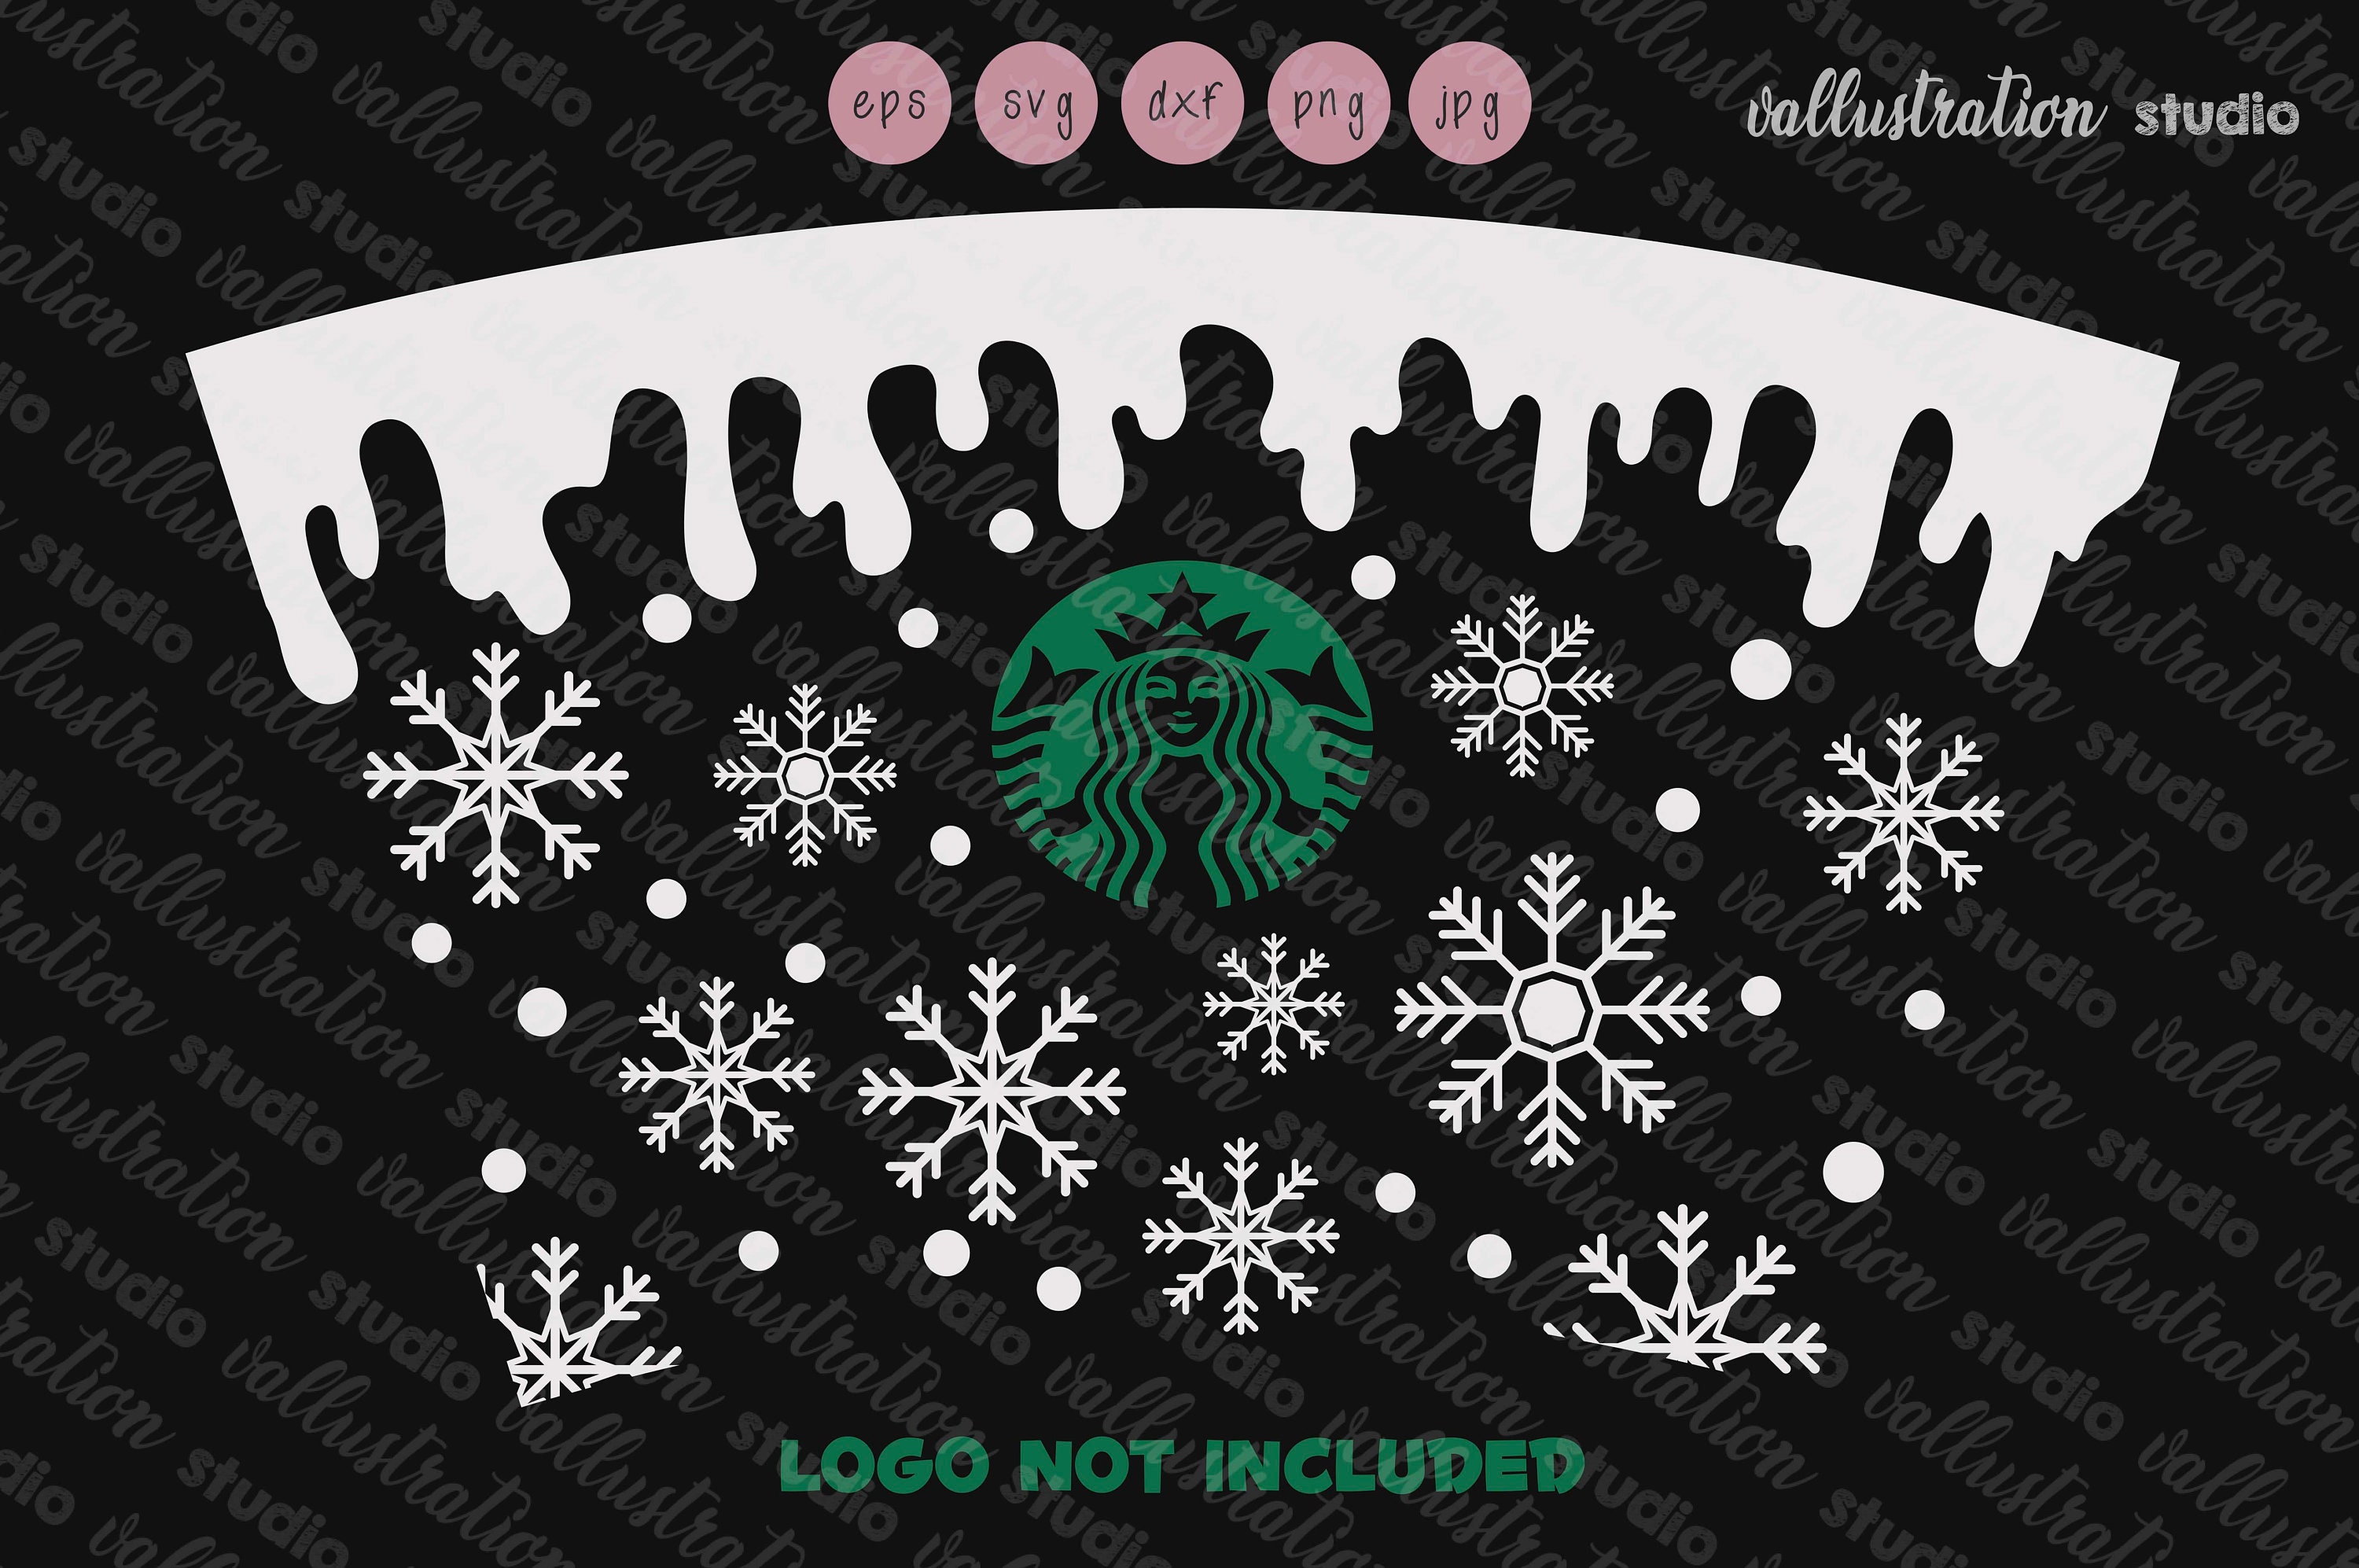 Christmas Coffee SVG  Starbucks Coffee SVG - Vectplace